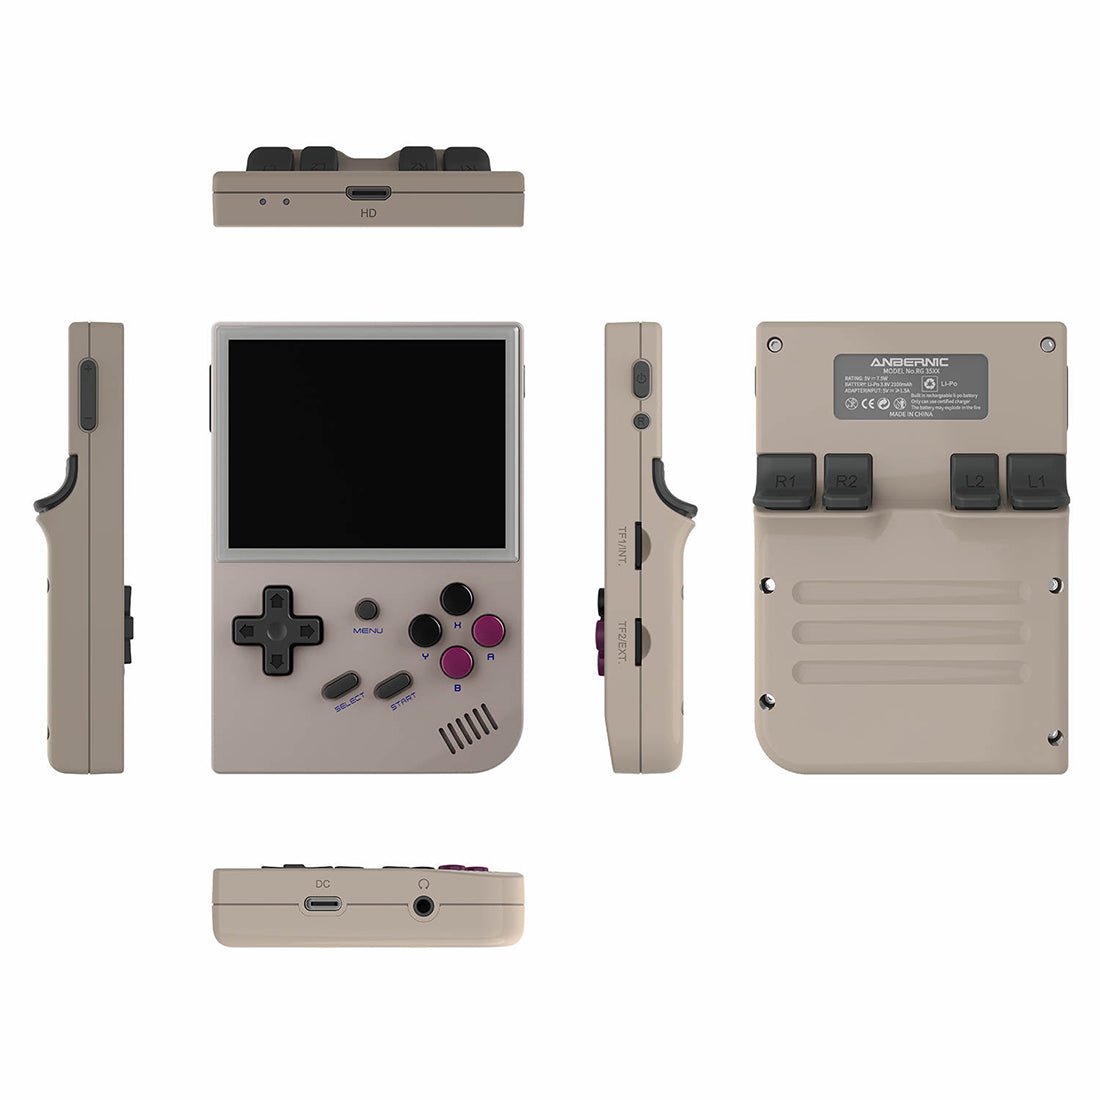 Anbernic RG35XX Handheld Gaming Console - Gray - جهاز ألعاب - Store 974 | ستور ٩٧٤